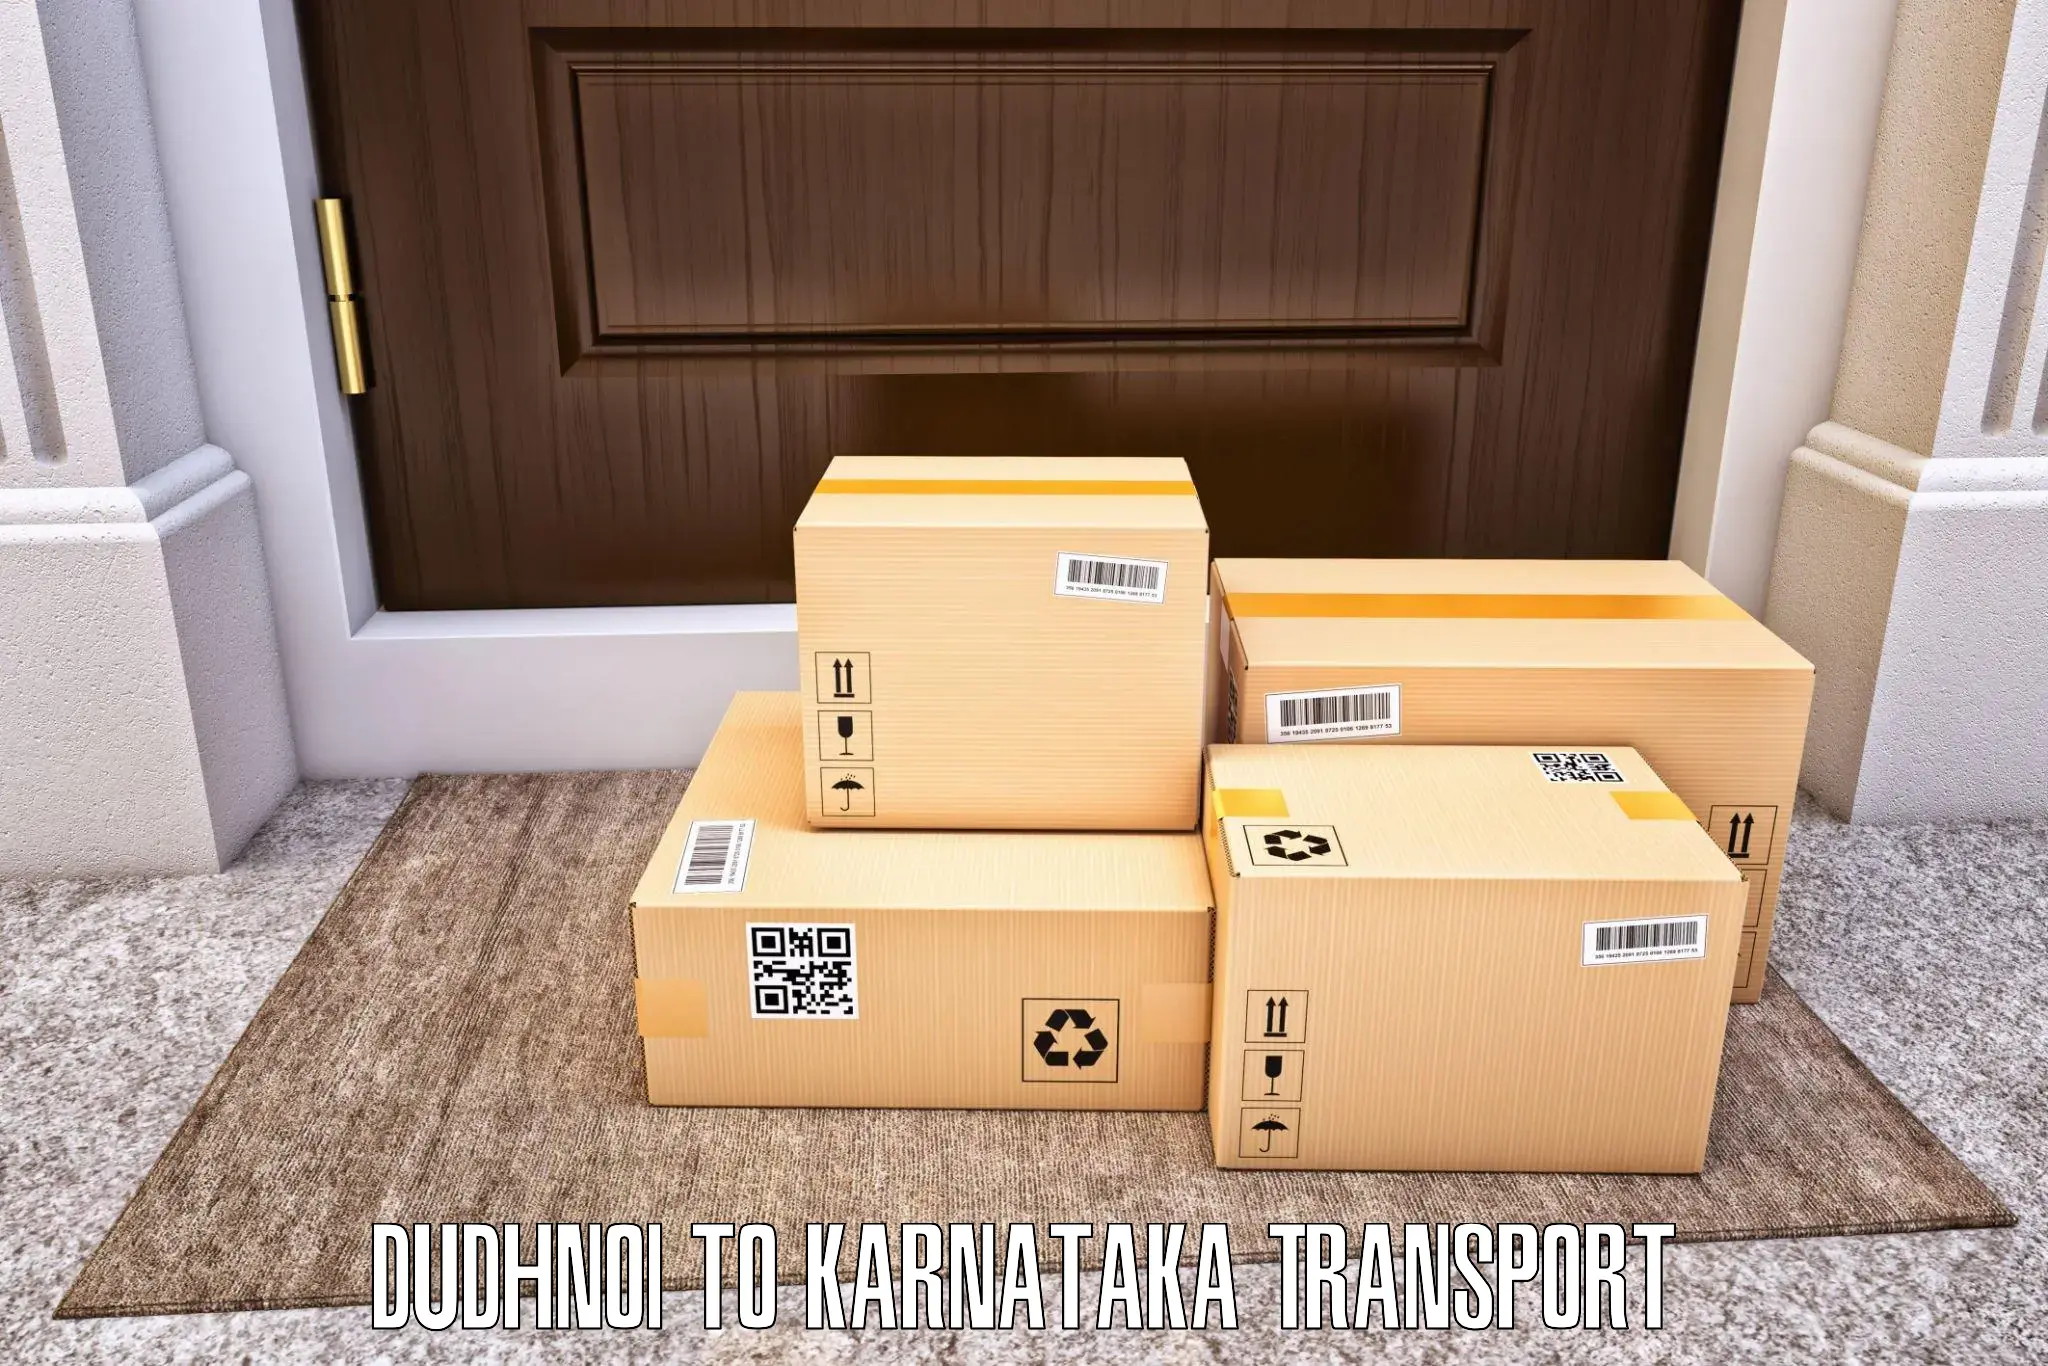 Truck transport companies in India Dudhnoi to Moodabidri